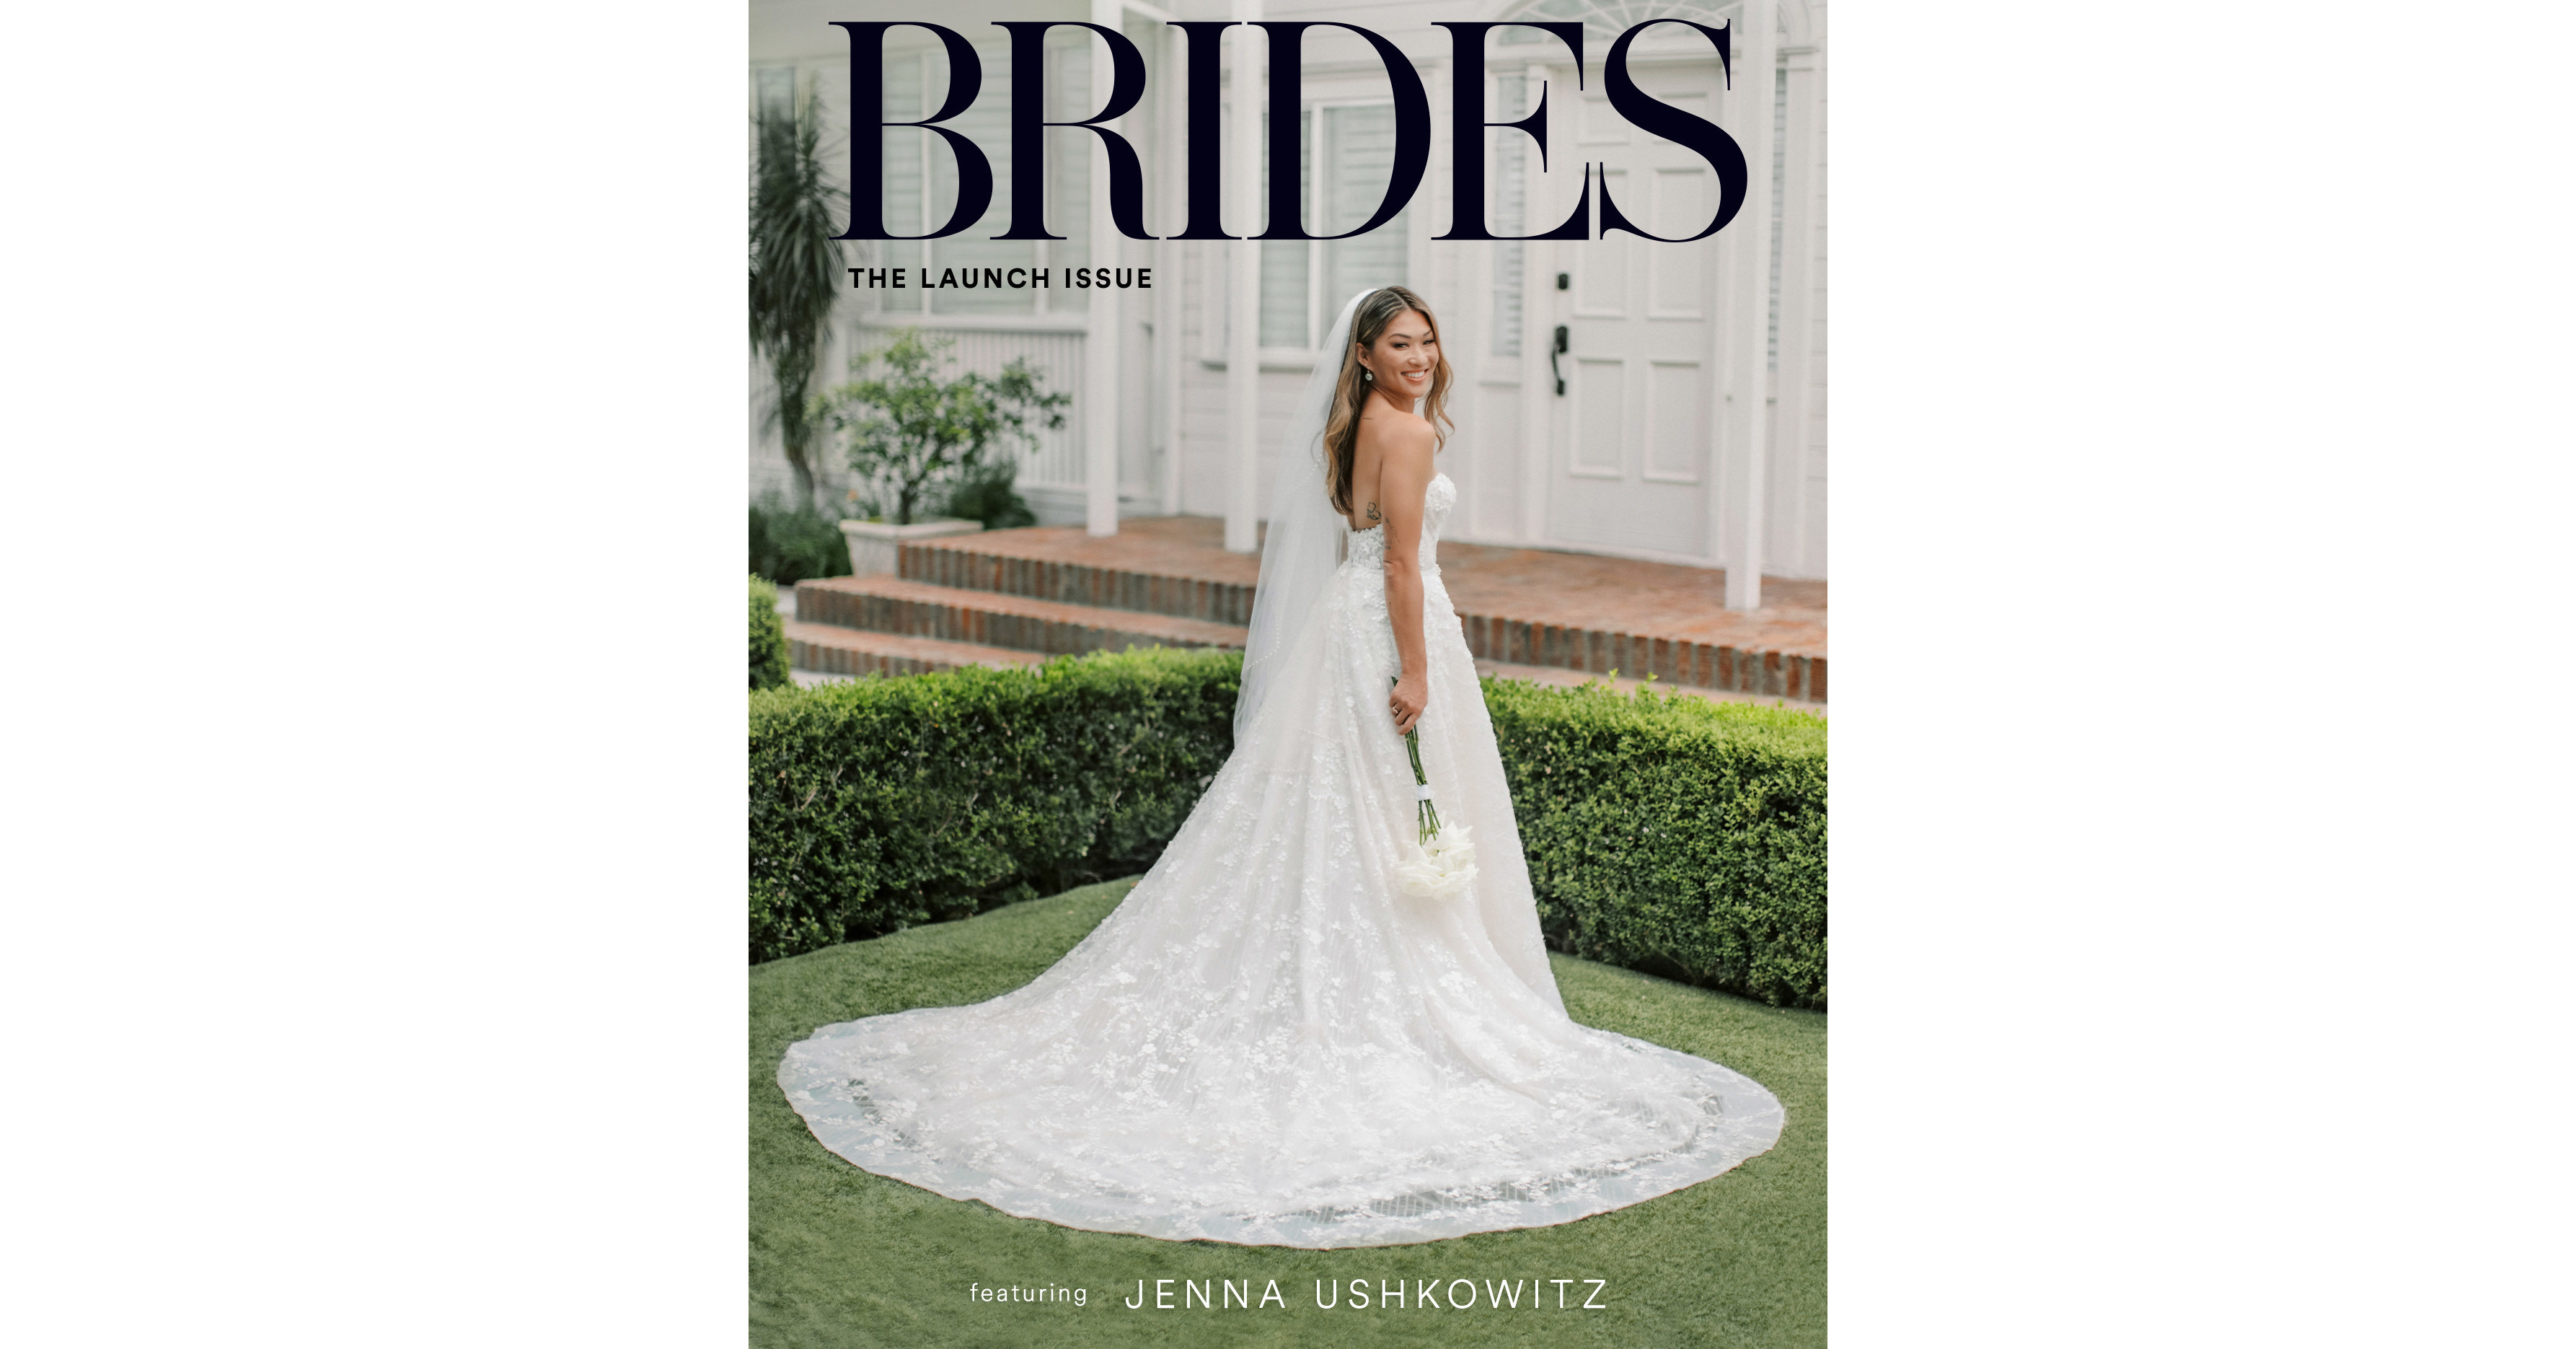 Brides Launches First-Ever Digital Magazine With Real Wedding Of Glee Star Jenna Ushkowitz